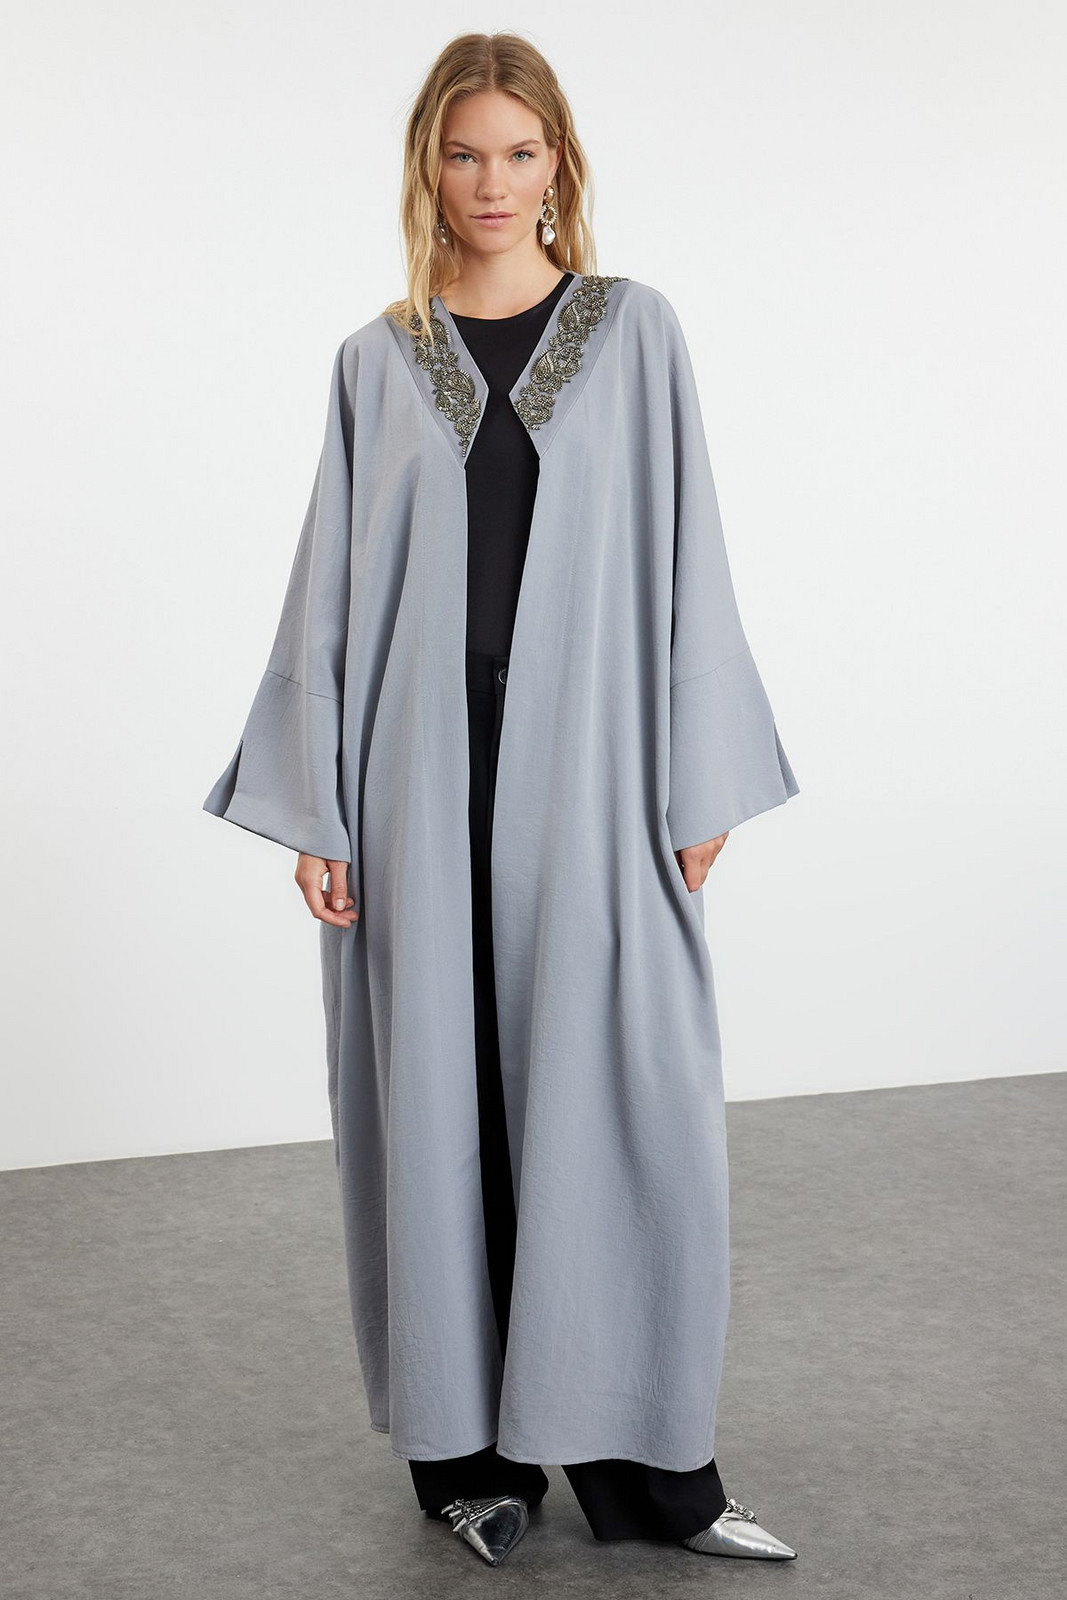 Trendyol Gray Embroidery Accessory Detailed Woven Cap & Abaya & Abaya